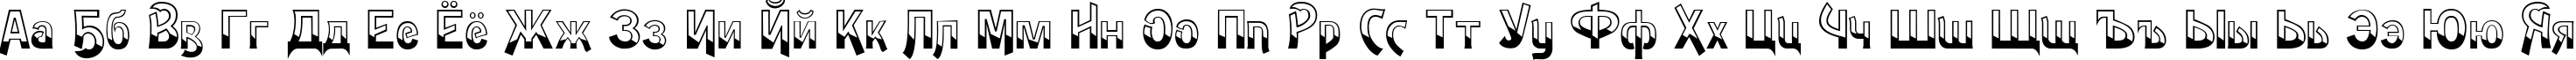 Пример написания русского алфавита шрифтом Theater Afisha